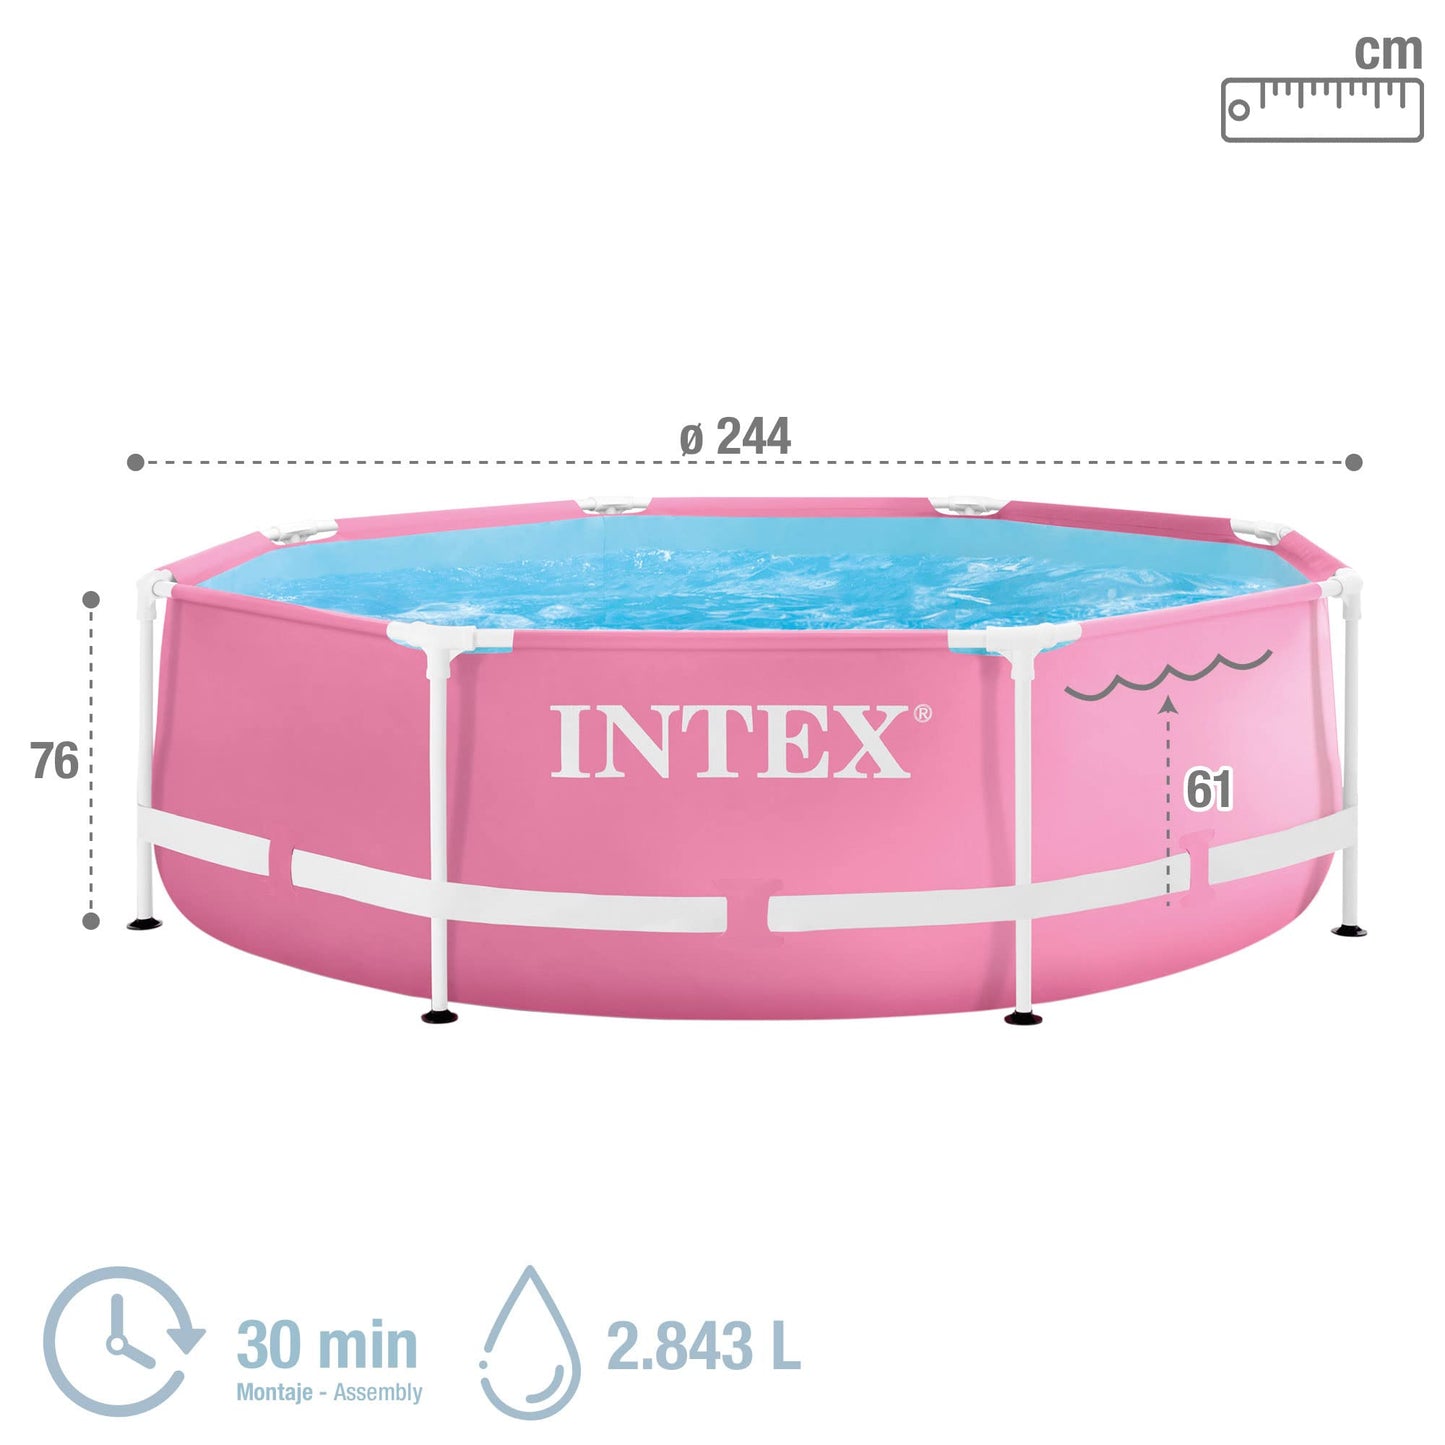 Intex 55257 - Piscina Desmontable Redonda Metal Frame Familiar Color Rosa, Medidas Ø244x76 cm, Capacidad 2,843 litros, Material Resistente Triple Capa, Tubular, Infantil